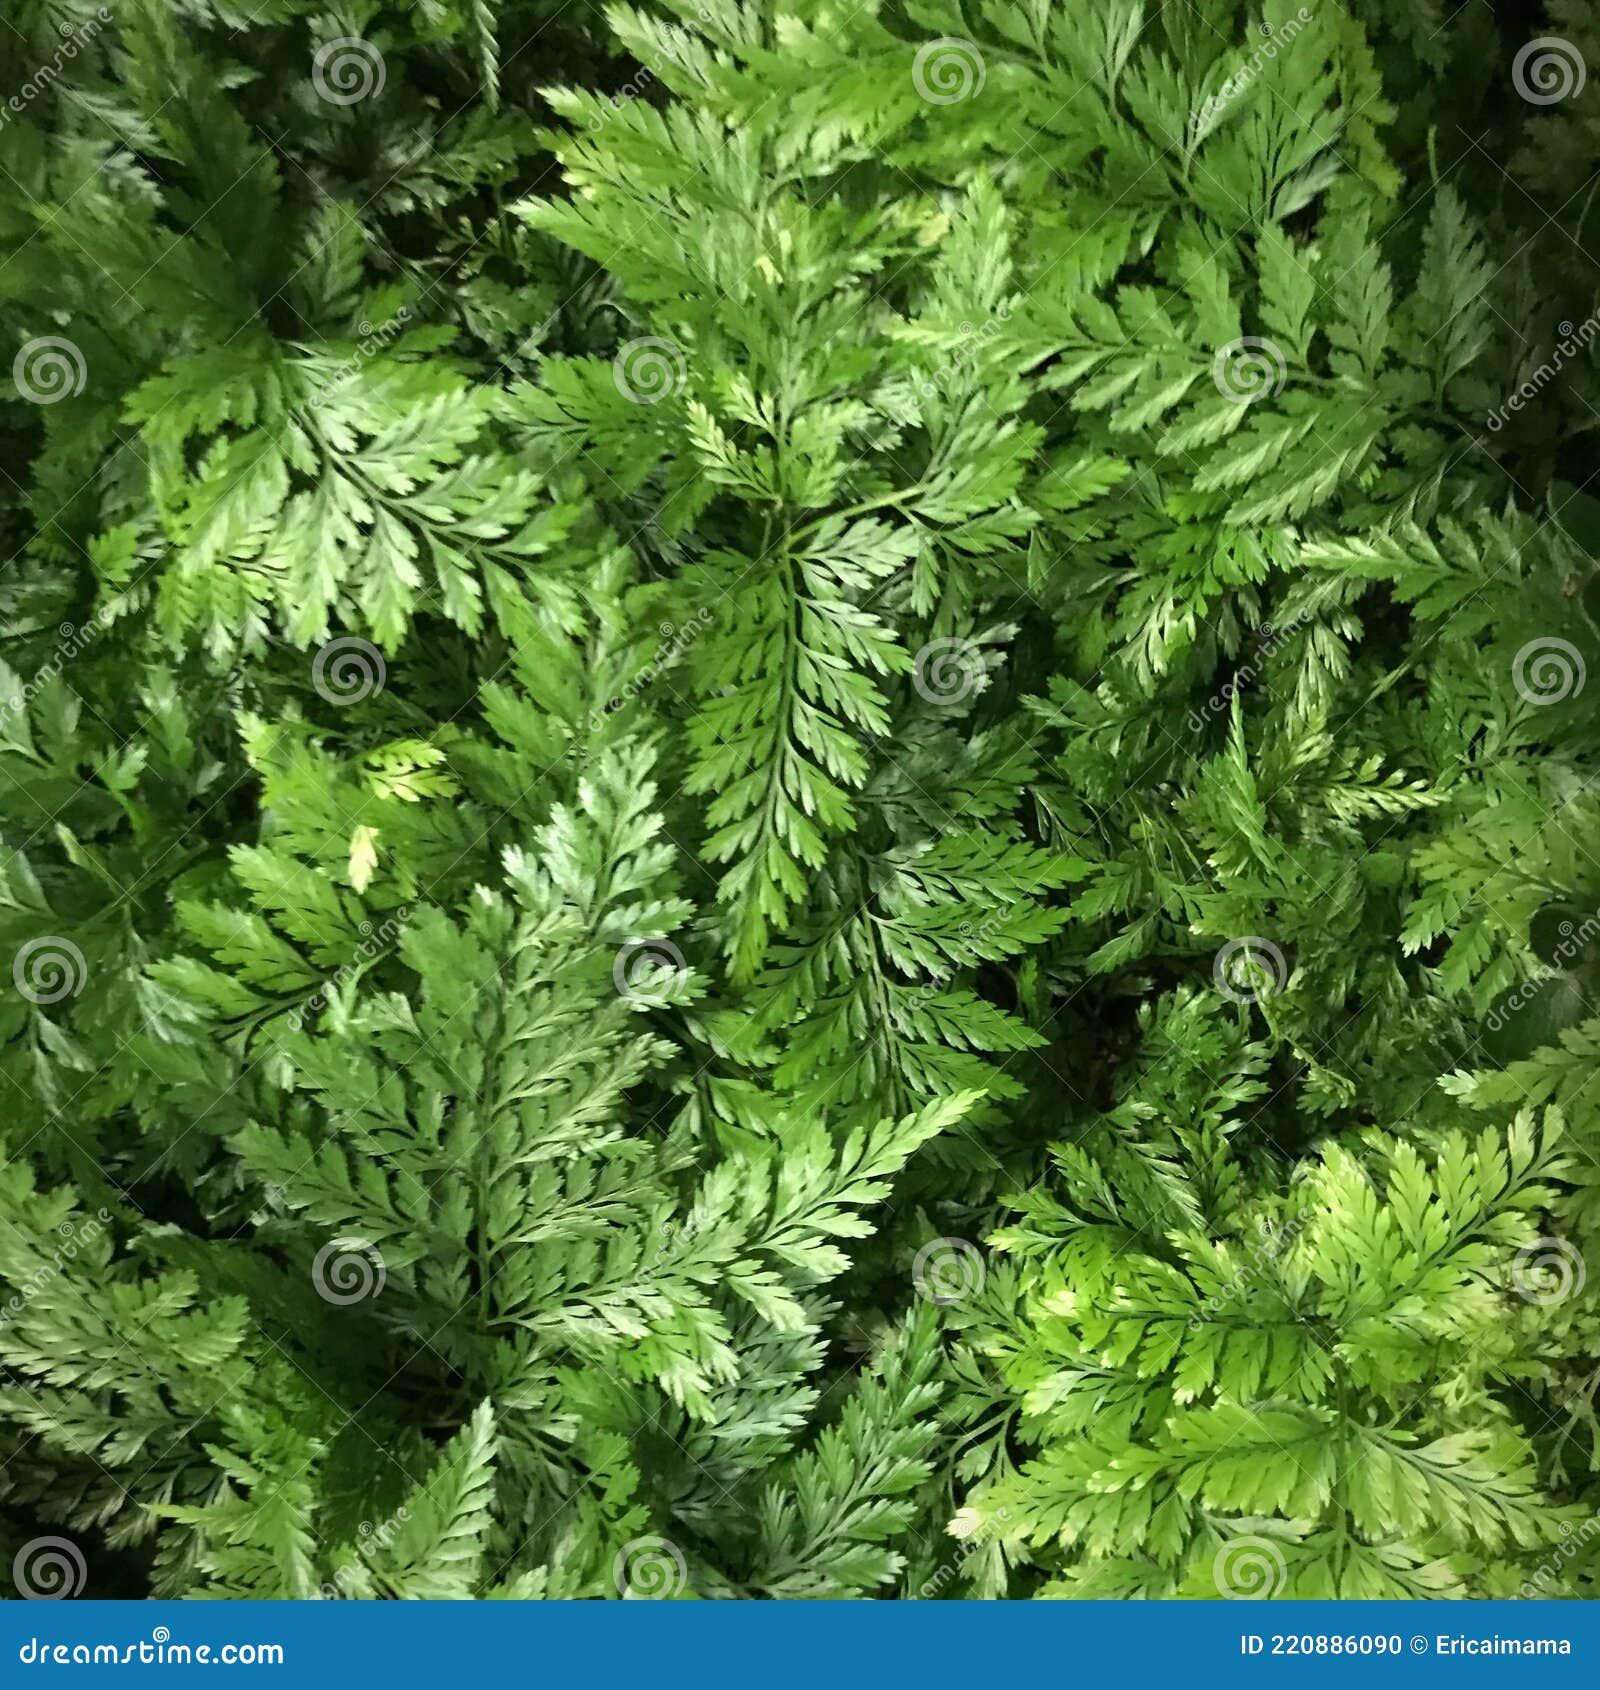 fiji davallia. green plant background. square photo image.